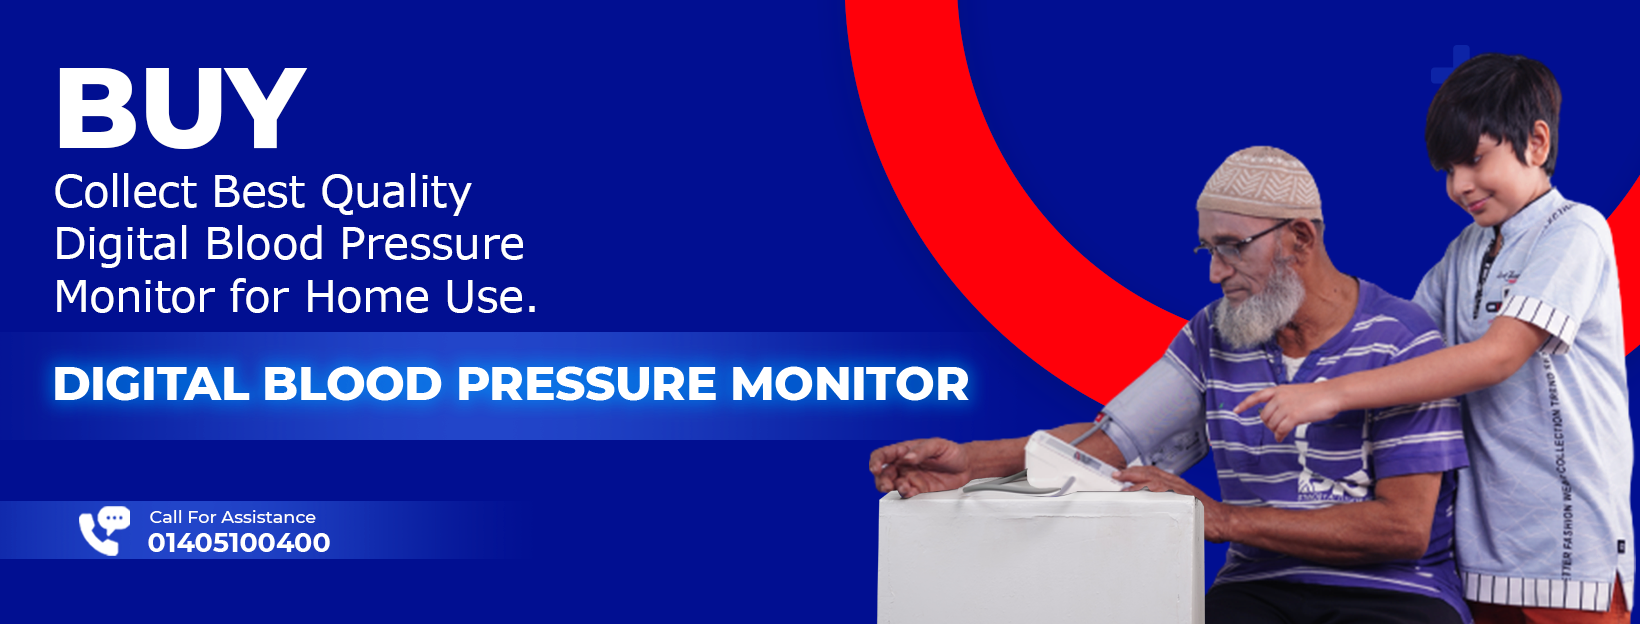 Digital Blood Pressure Monitor in Bangladesh